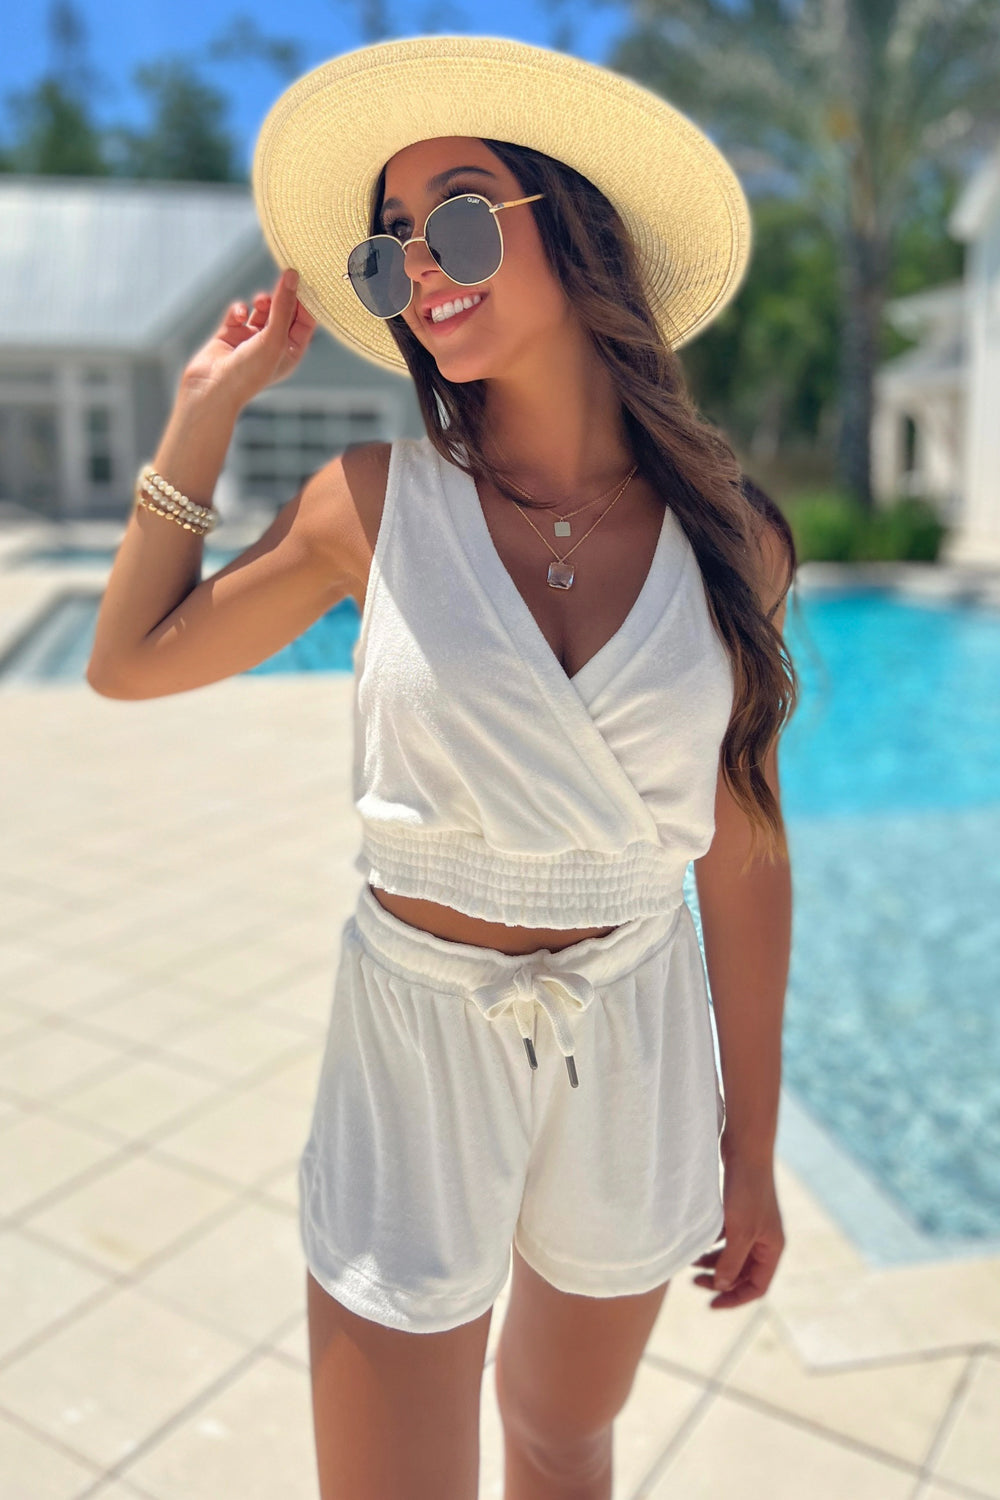 Pool Days Ahead Terry Cloth Surplice Top - White | Makk Fashions